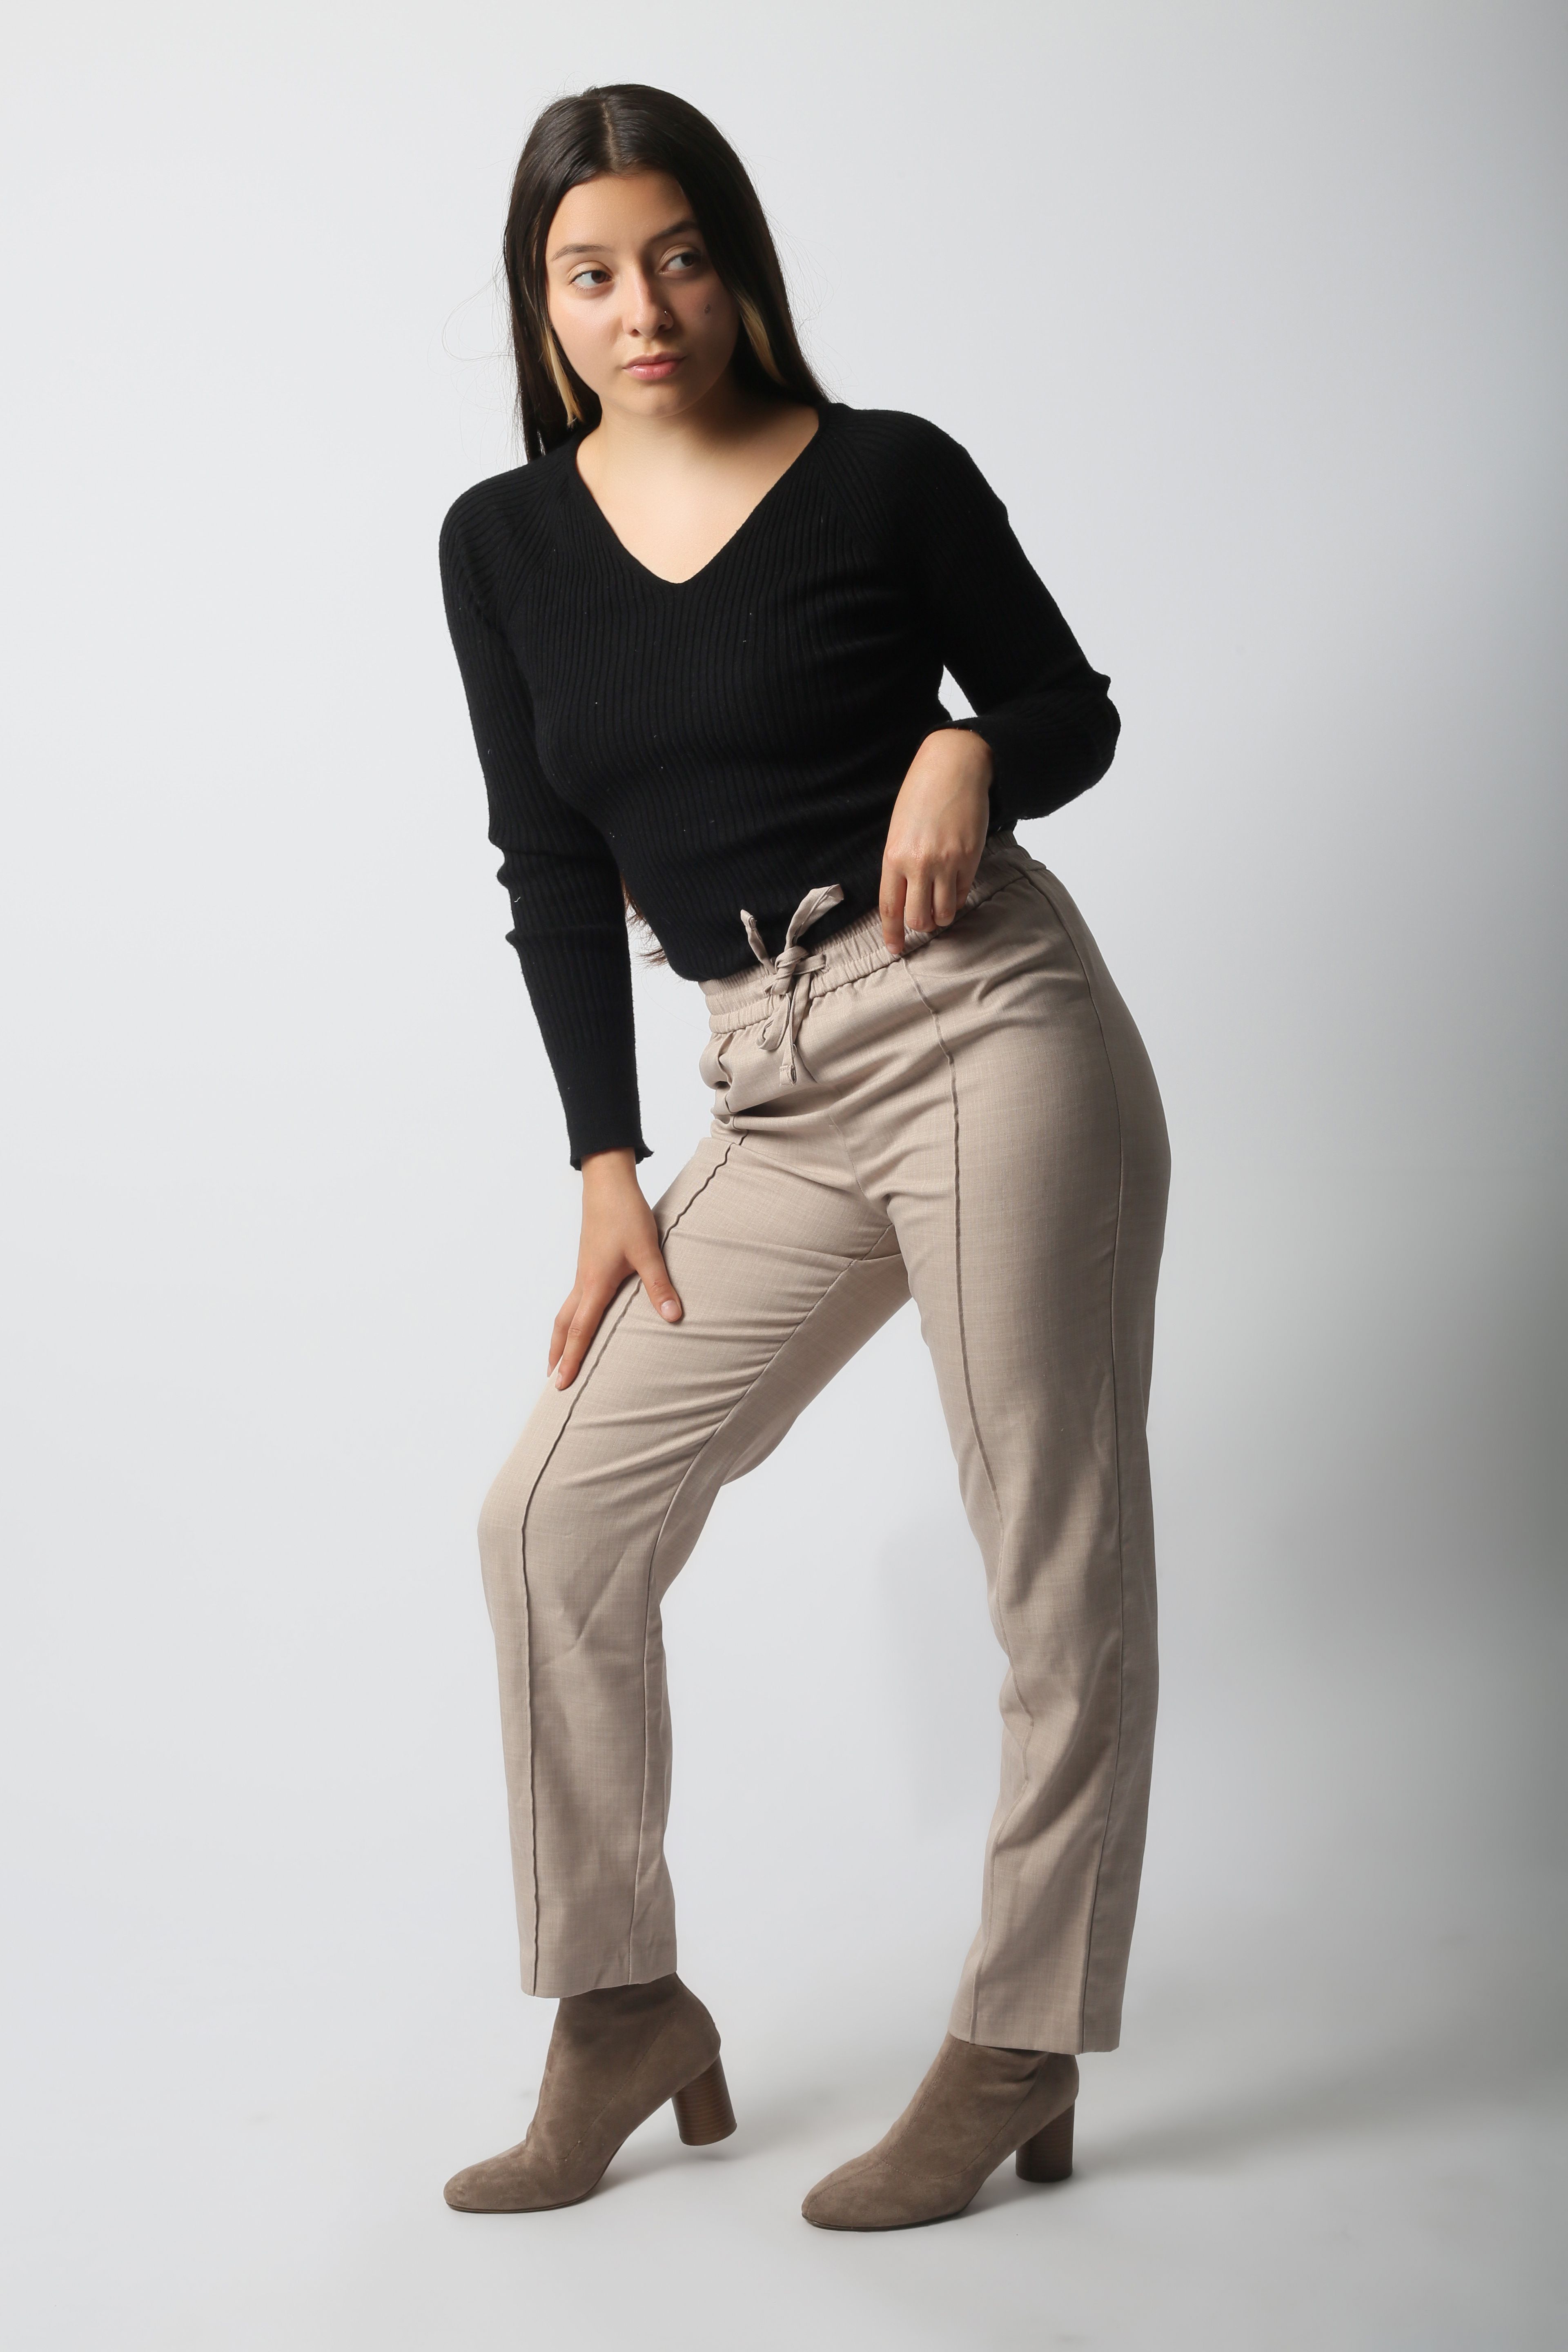 Sofia Mladenova Profile | YUMM - Your Model Management